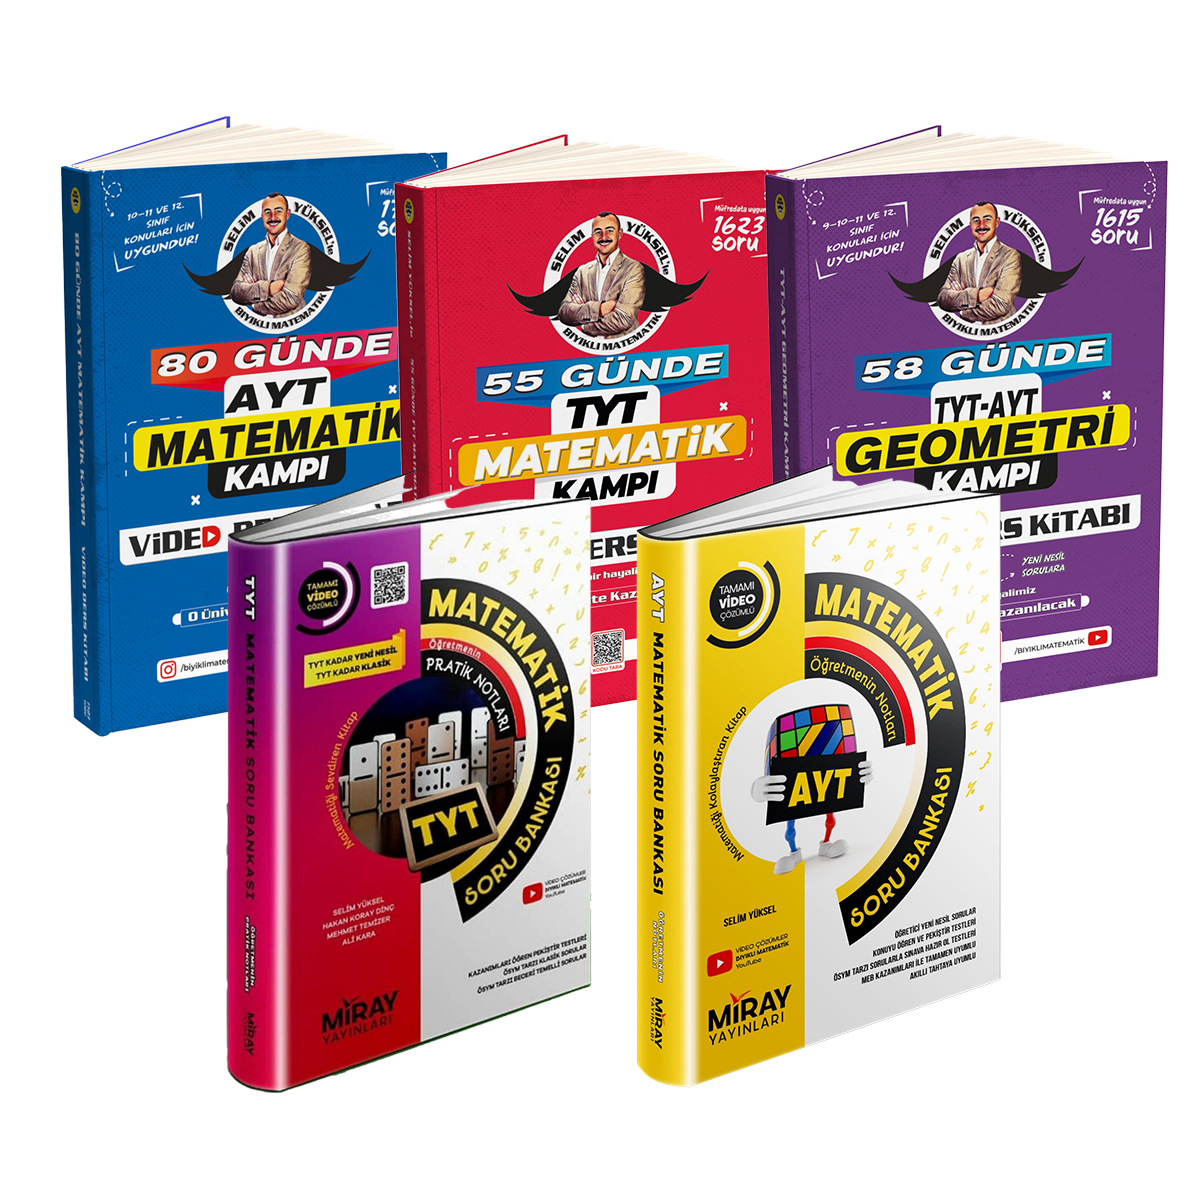 5li Bıyıklı Matematik  TYT-AYT-GEO  Video Ders Kitapları ve Miray Tyt -Ayt Matematik Soru Bank